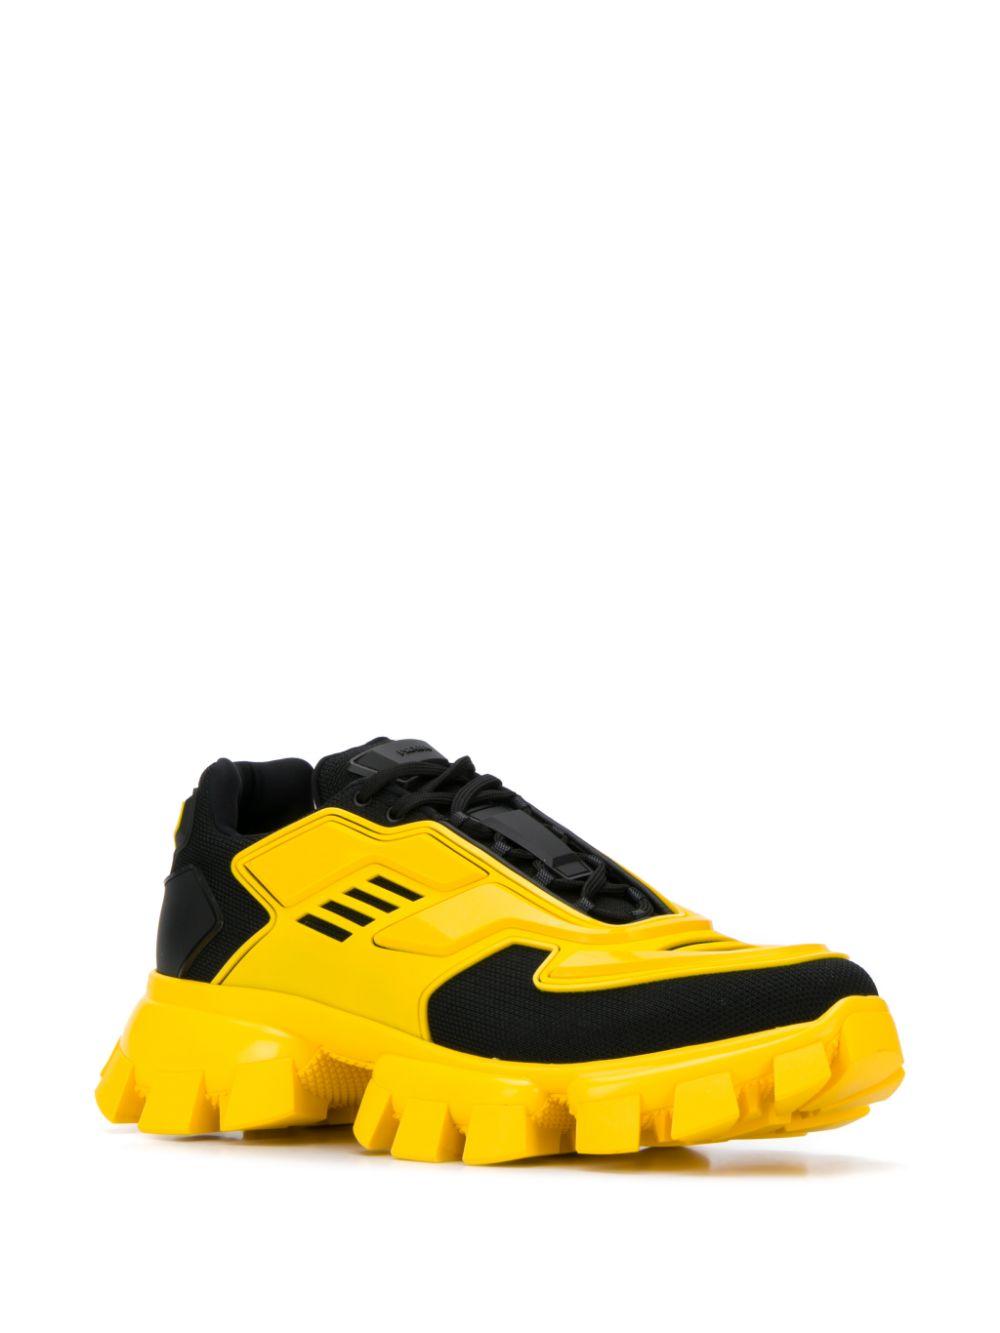 Prada Rubber Cloudbust Thunder Sneakers in Black Yellow (Yellow) for Men |  Lyst